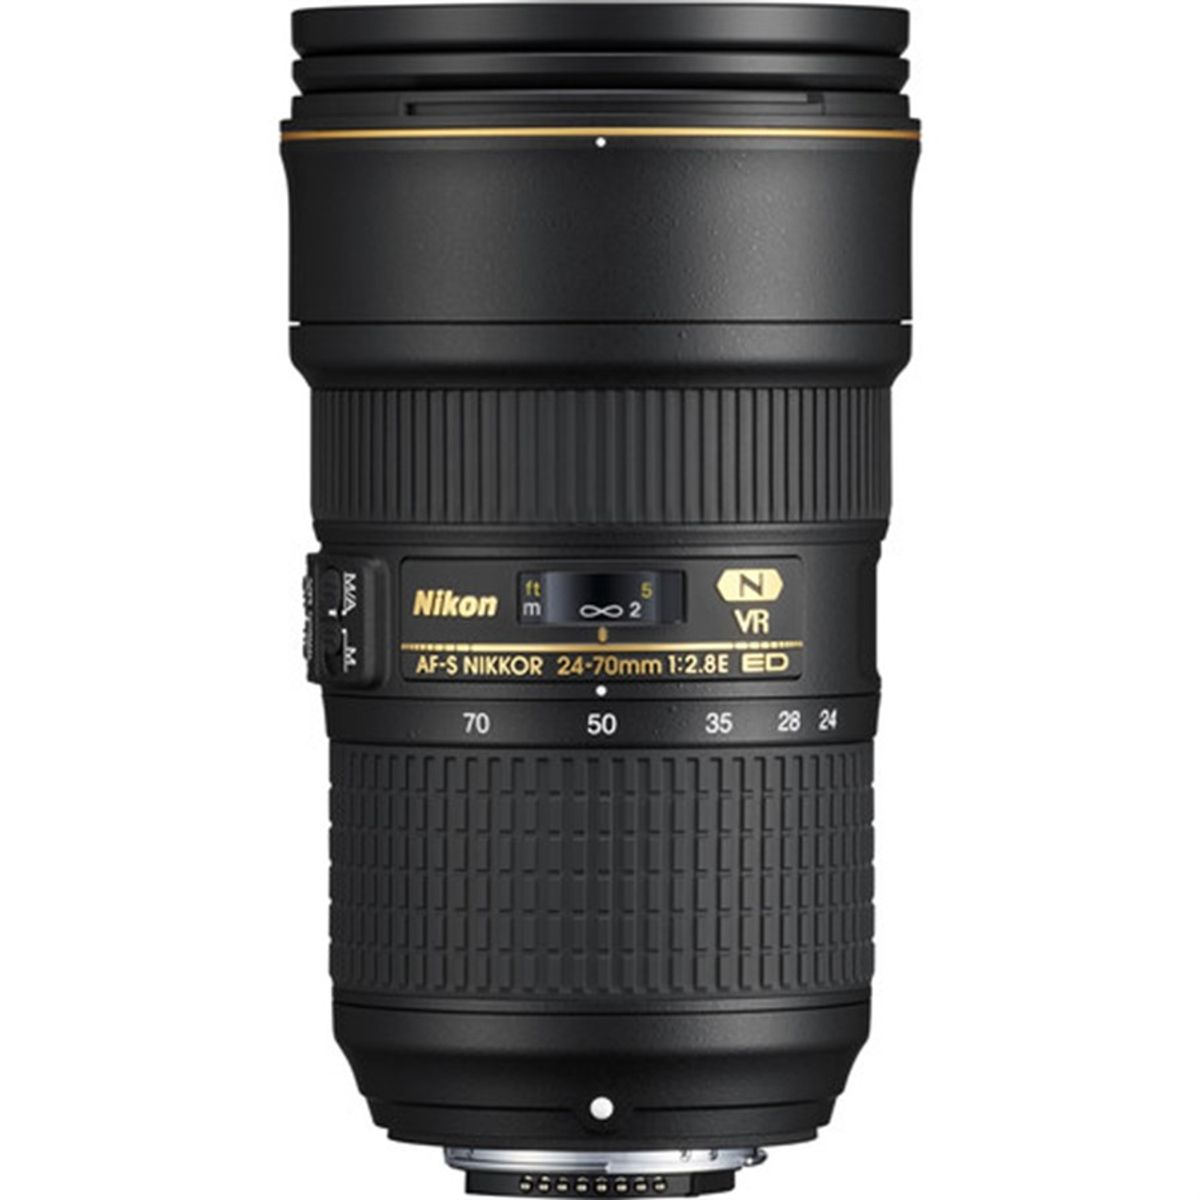 Lente Nikon Af-s 50mm 1.8g + Parasol + Bolso / Garantia